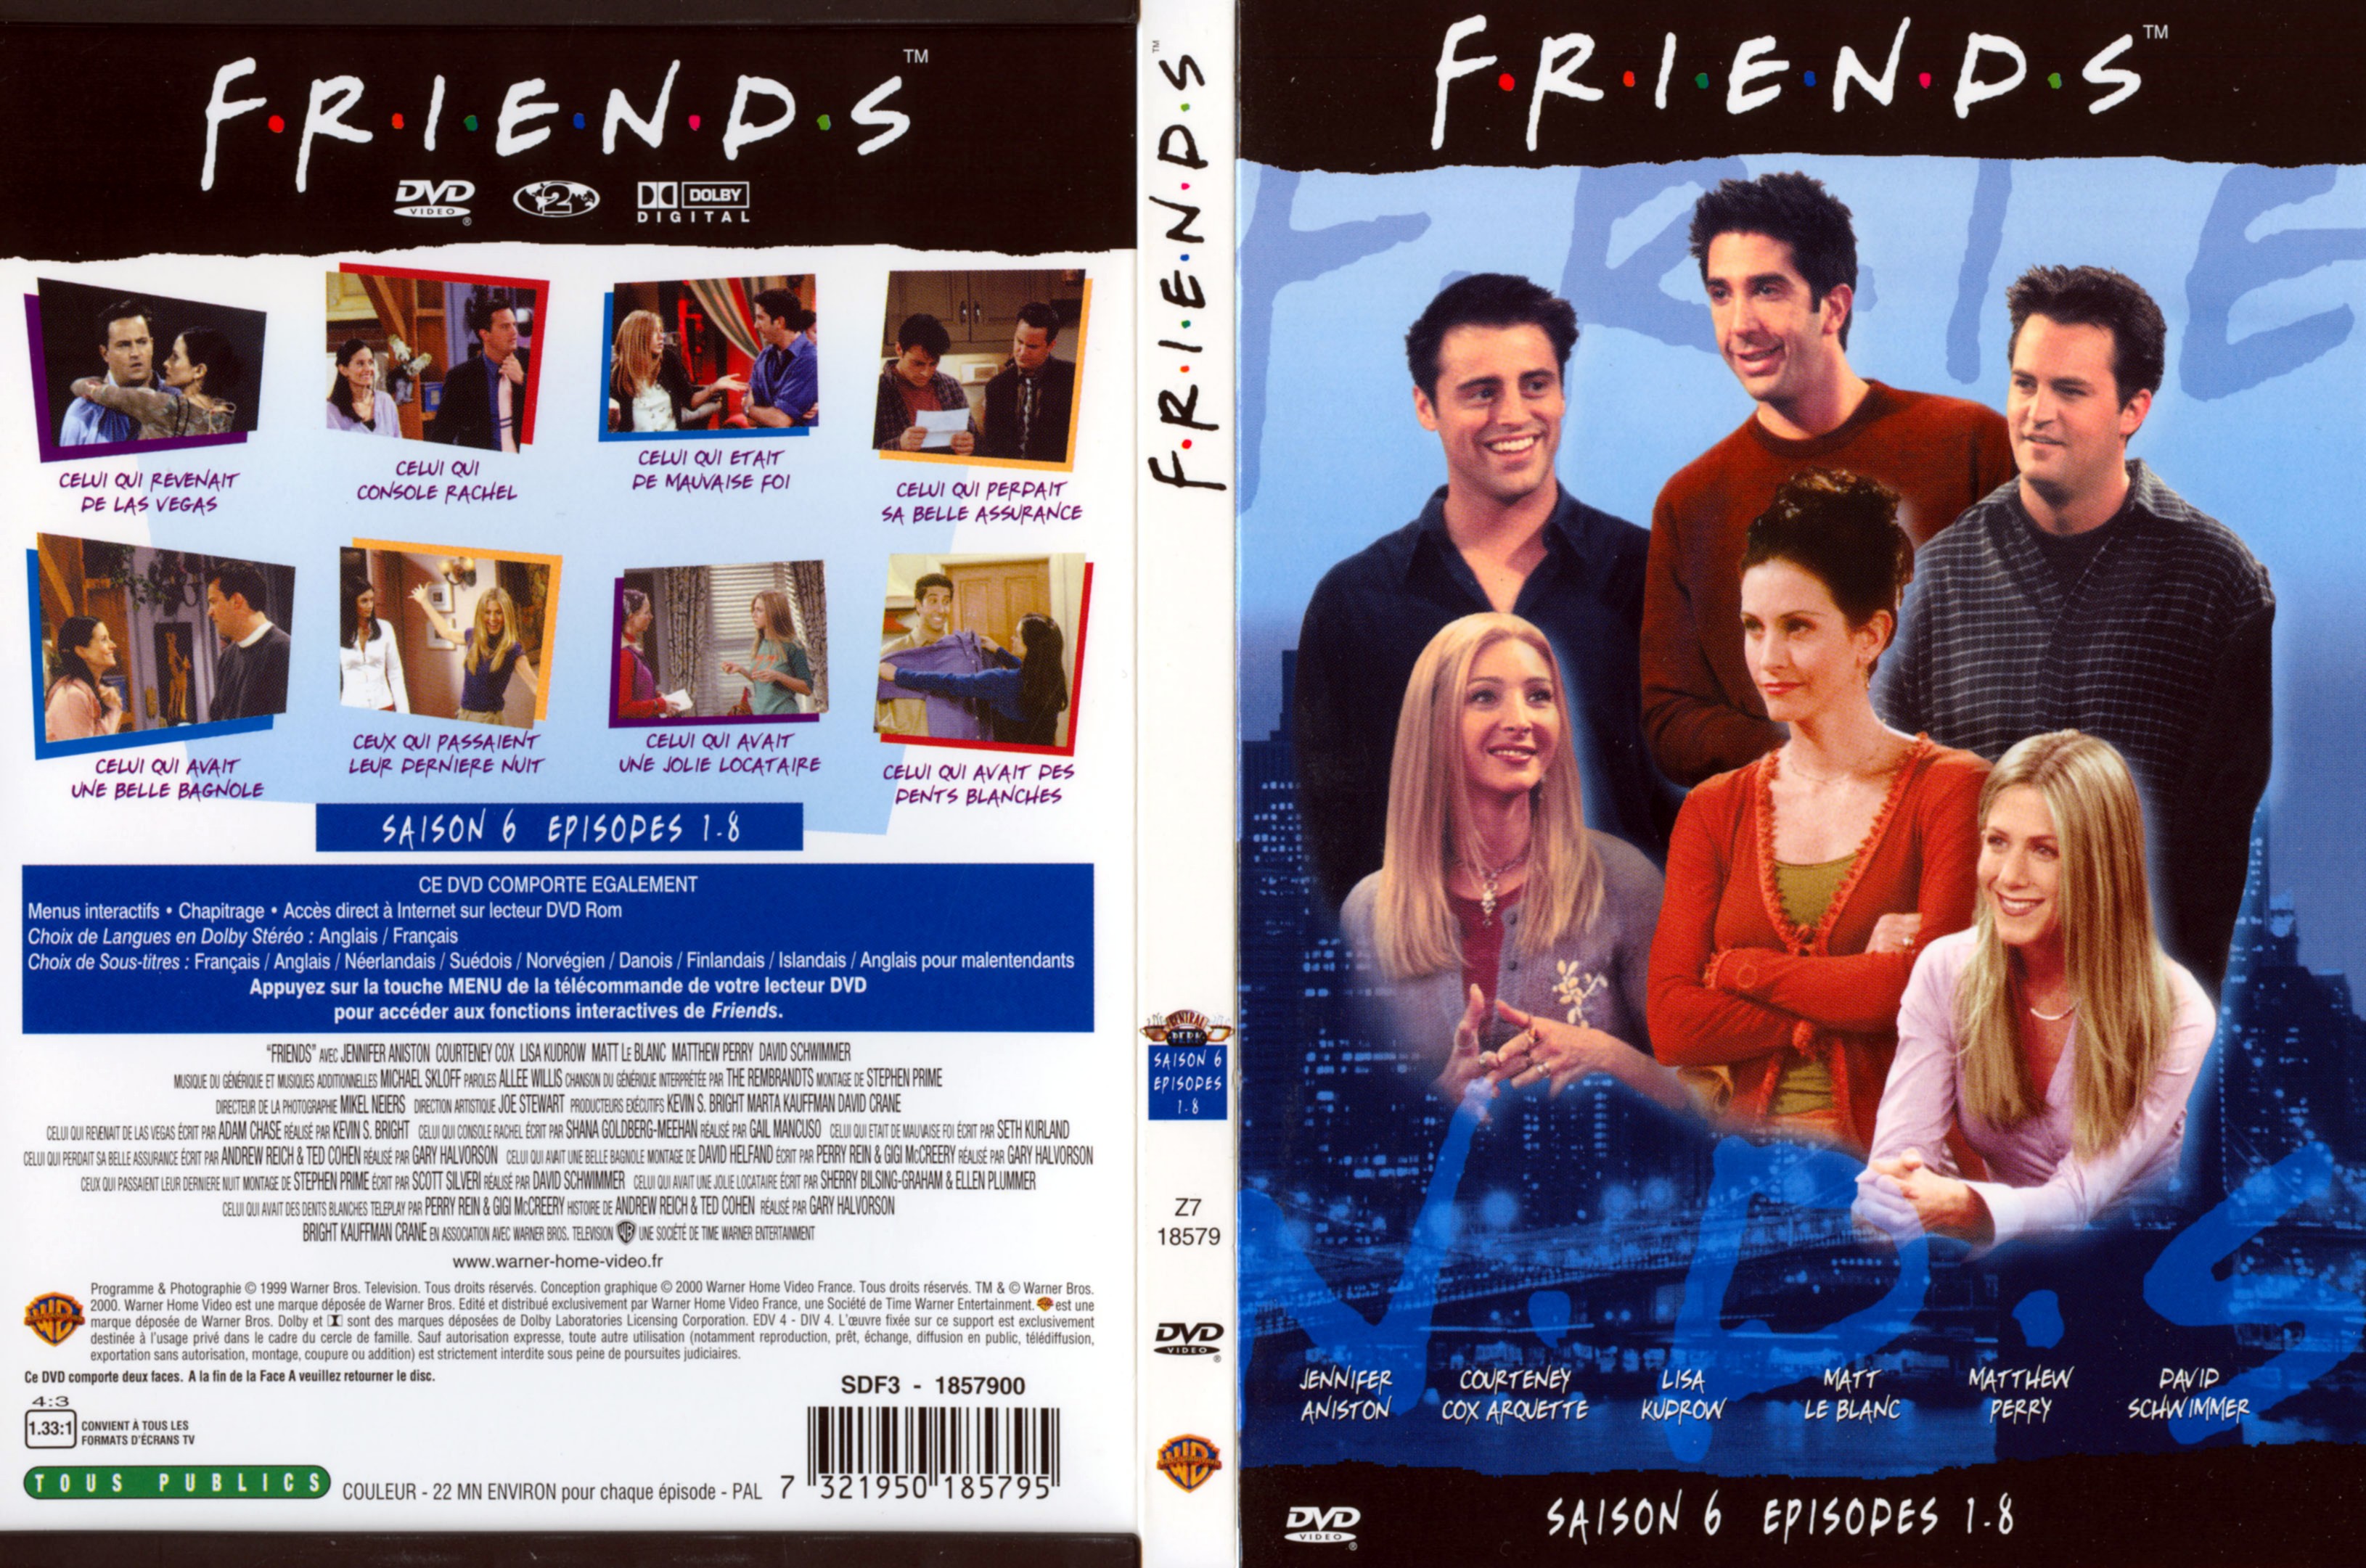 Jaquette DVD Friends saison 6 dvd 1